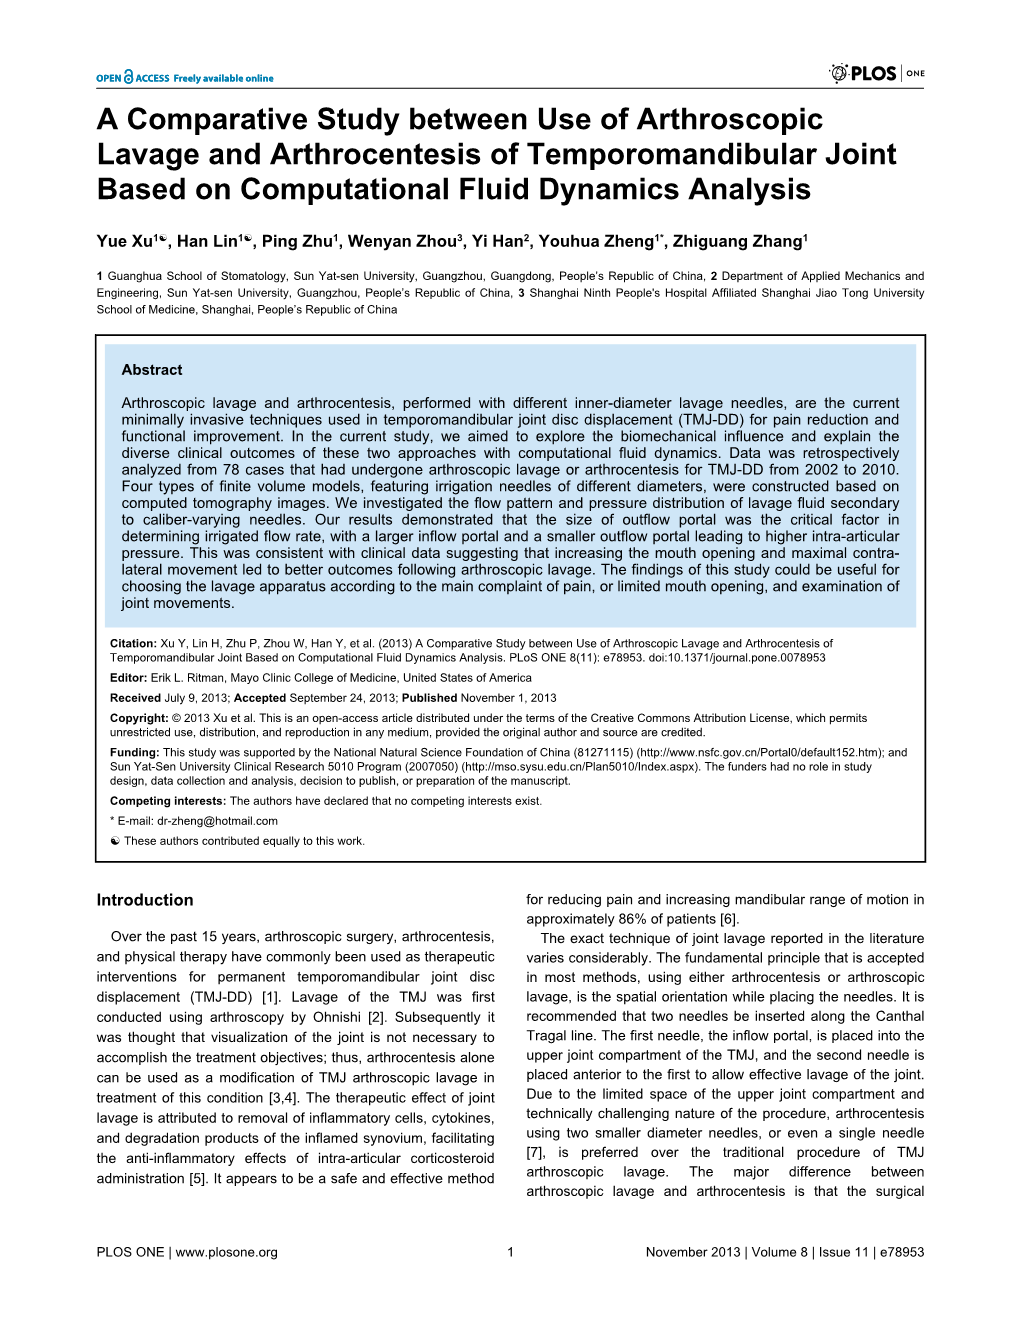 A Comparative Study Between Use of Arthroscopic Lavage and Arthrocentesis of Temporomandibular Joint Based on Computational Fluid Dynamics Analysis